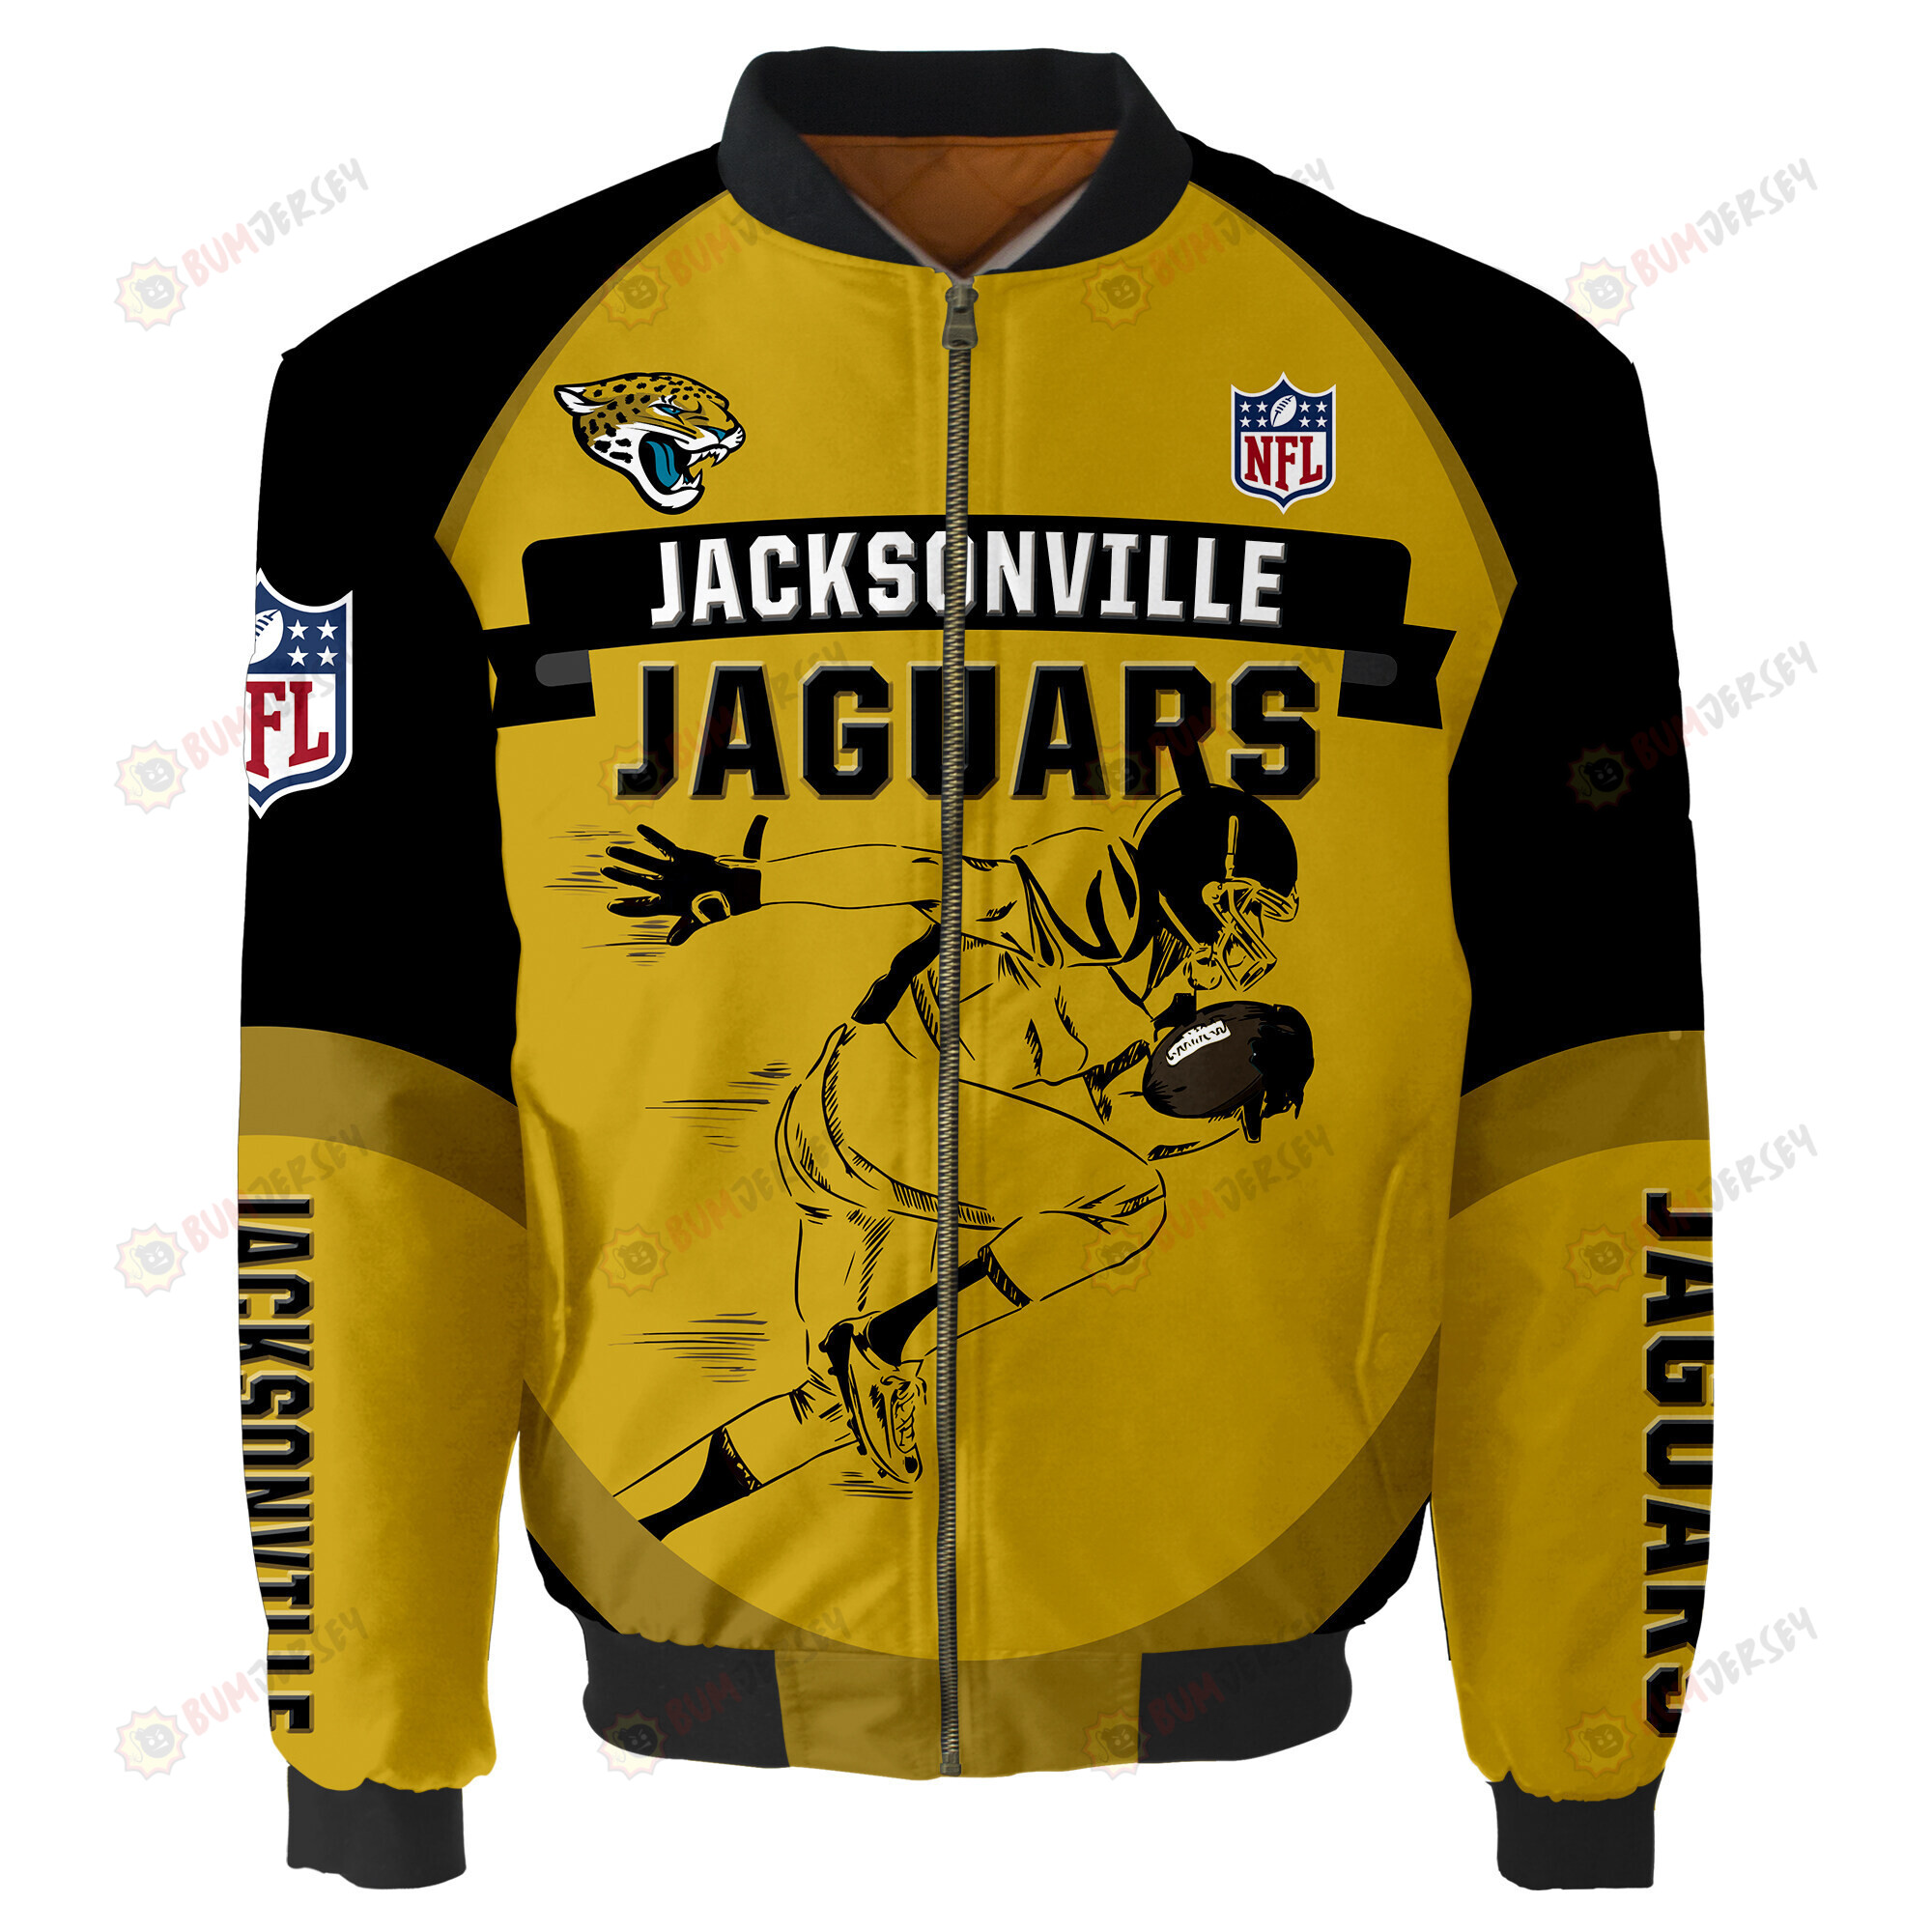 Jacksonville Jaguars Players Running Pattern Bomber Jacket - Yellow And Black